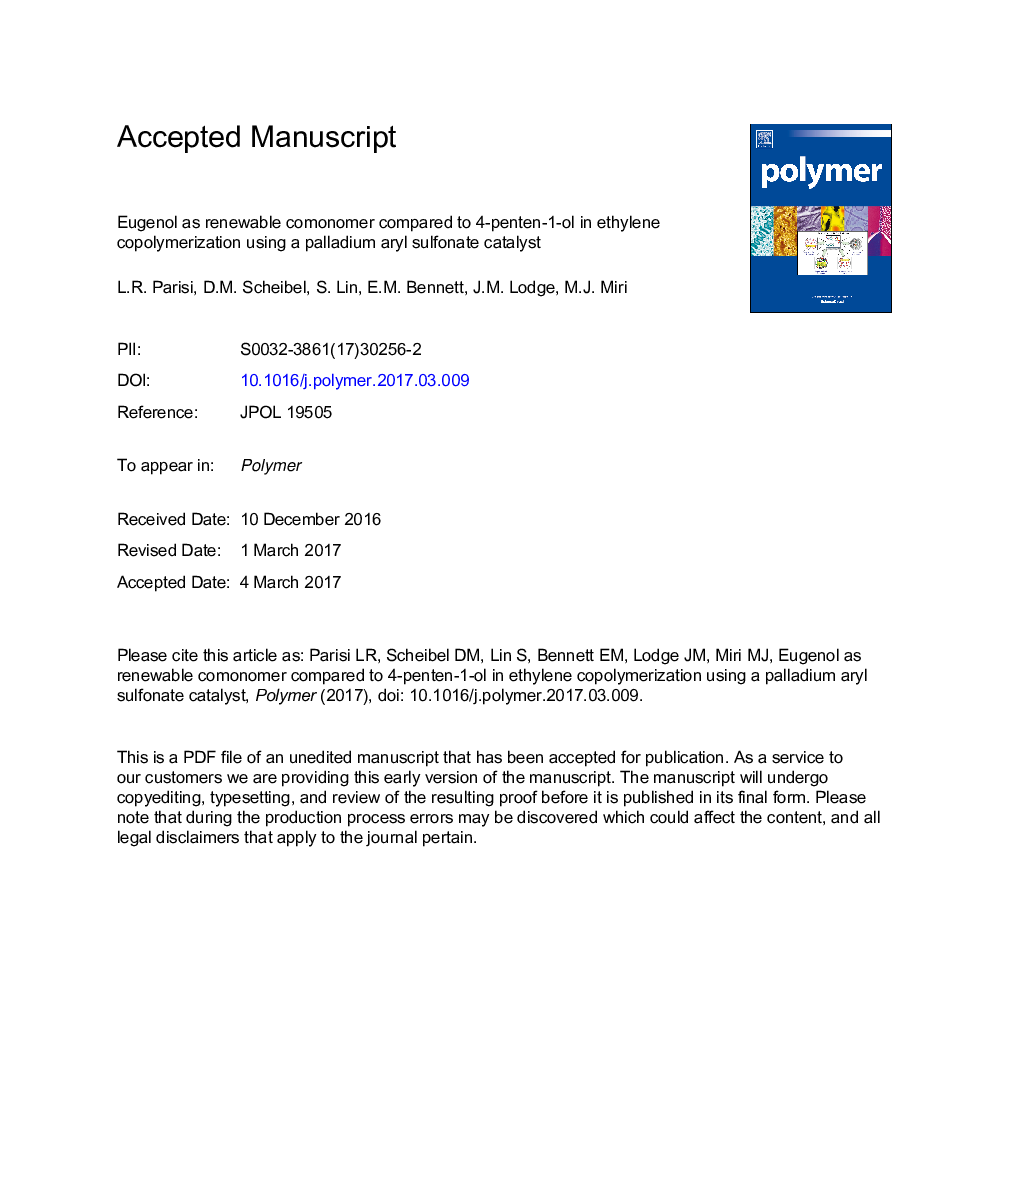 Eugenol as renewable comonomer compared to 4-penten-1-ol in ethylene copolymerization using a palladium aryl sulfonate catalyst